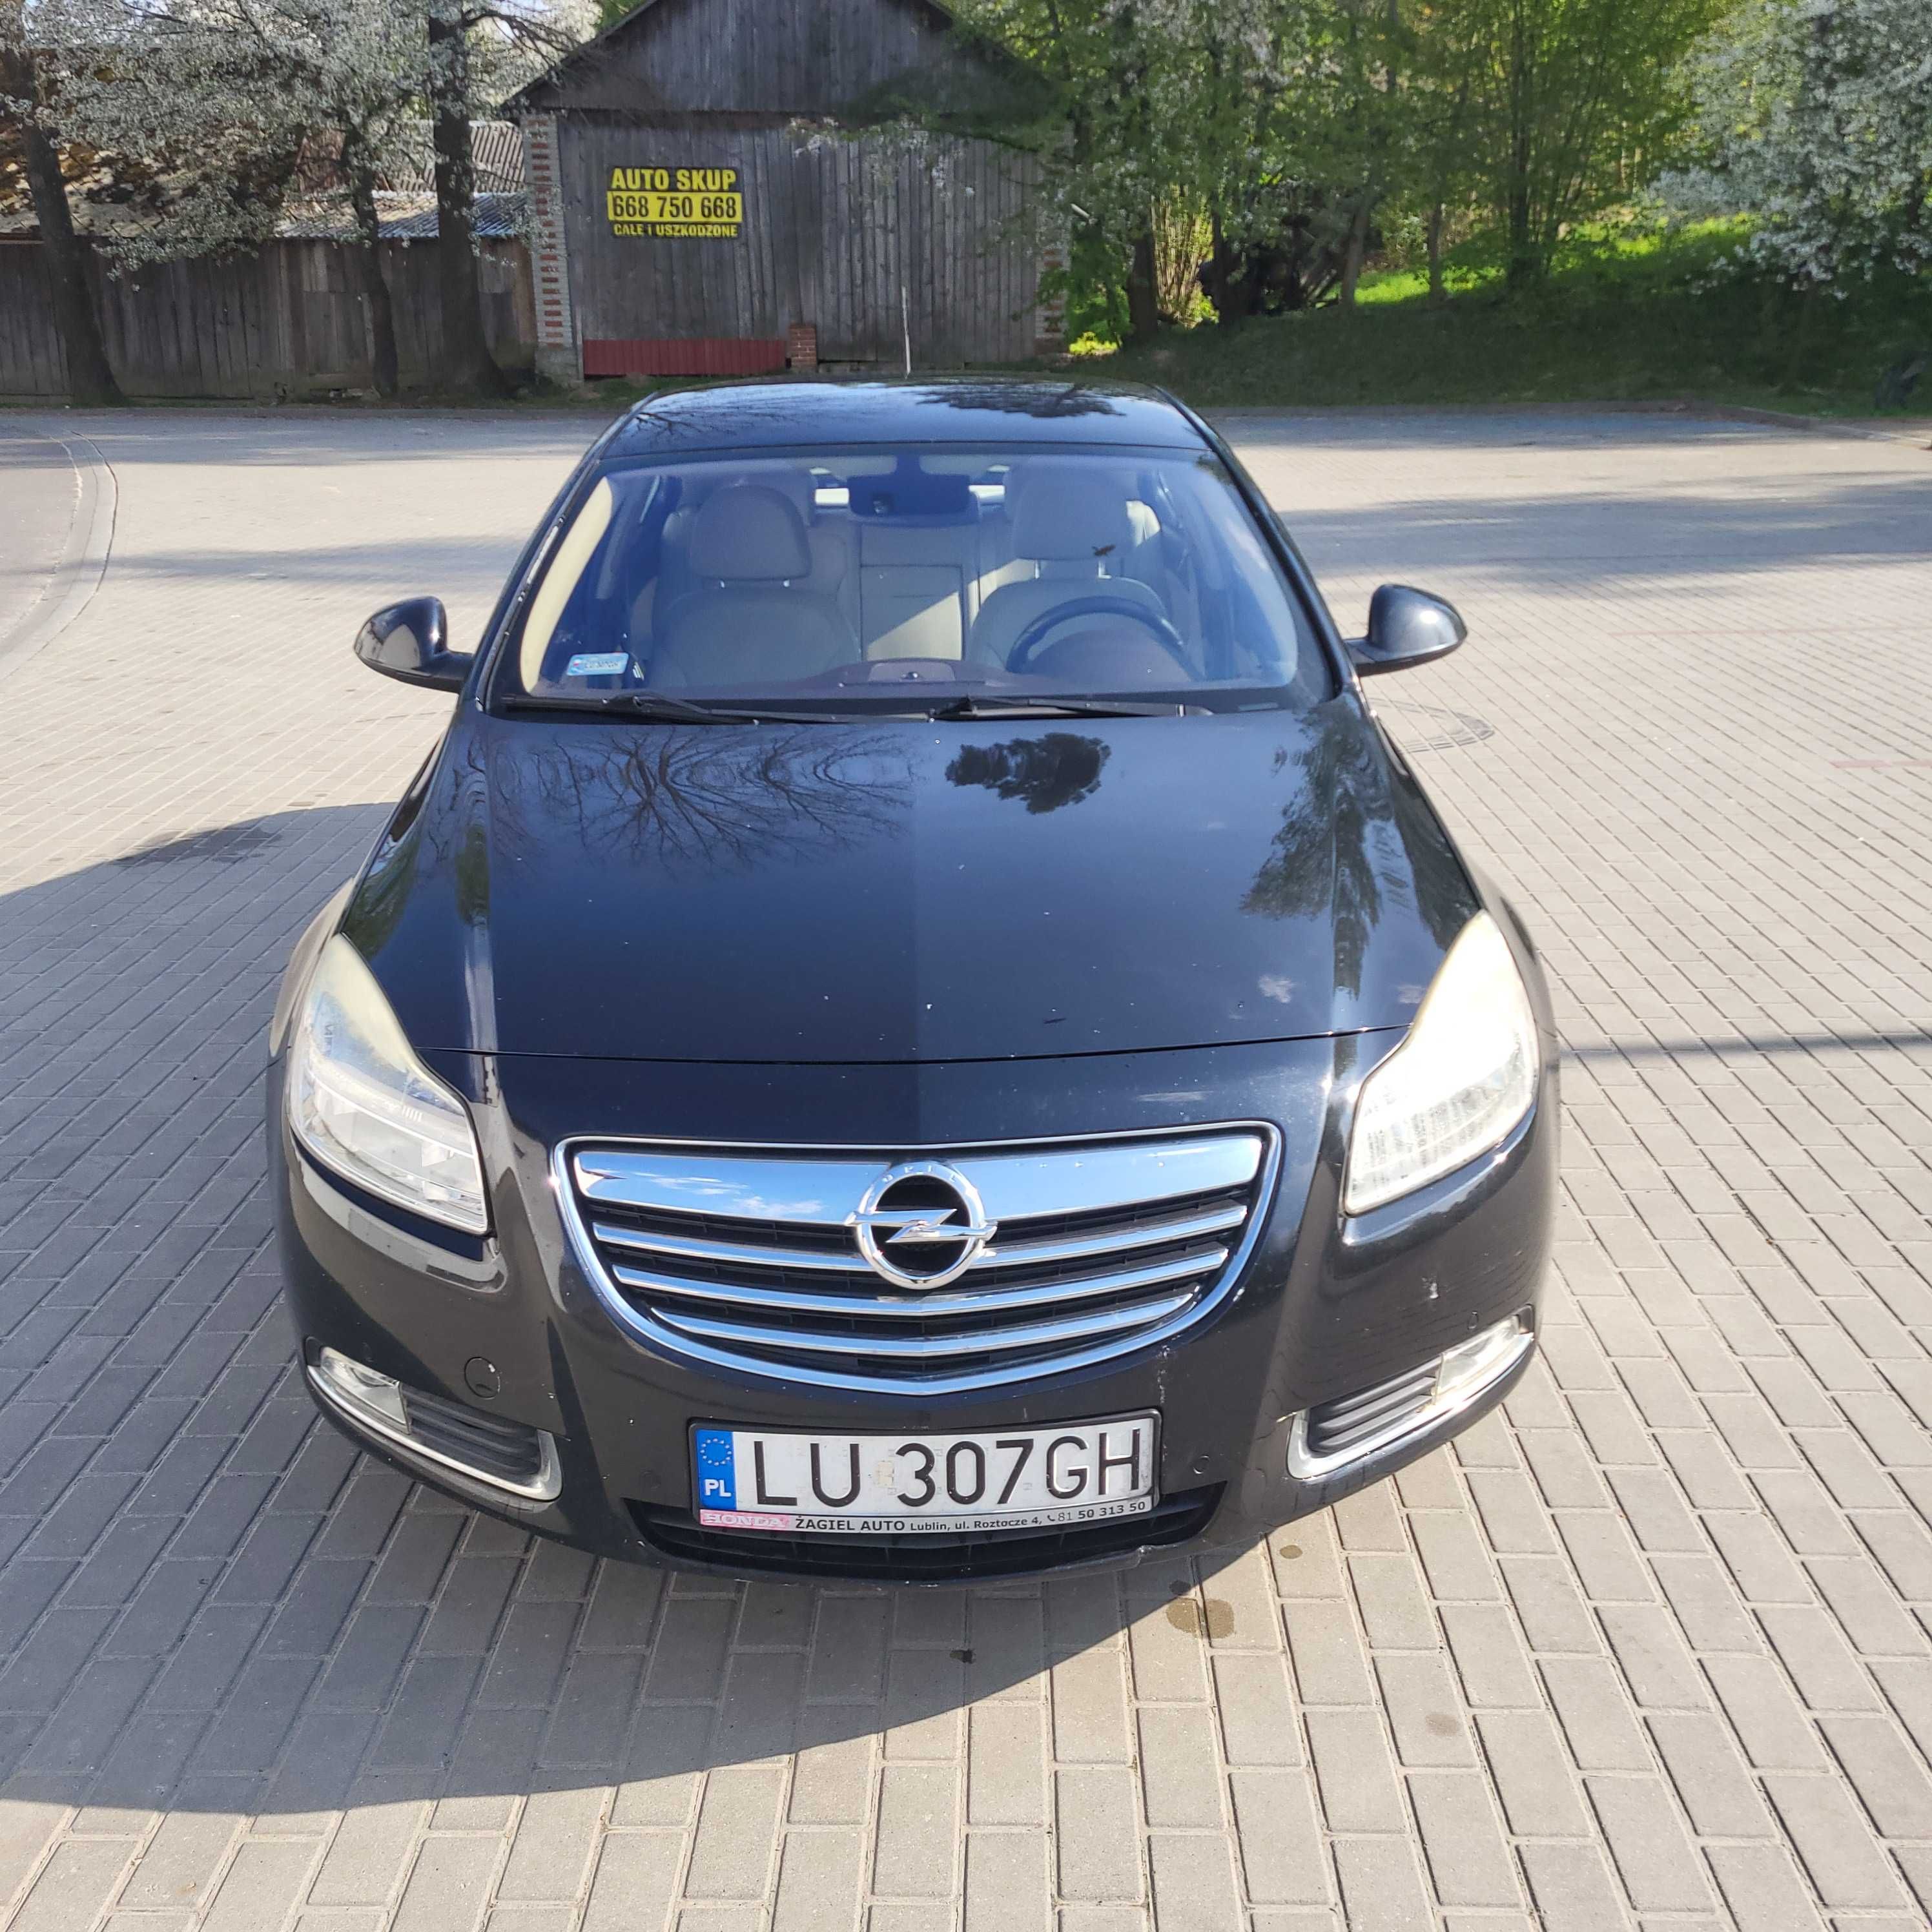 Opel Insignia czarna + dodatkowe alufelgi